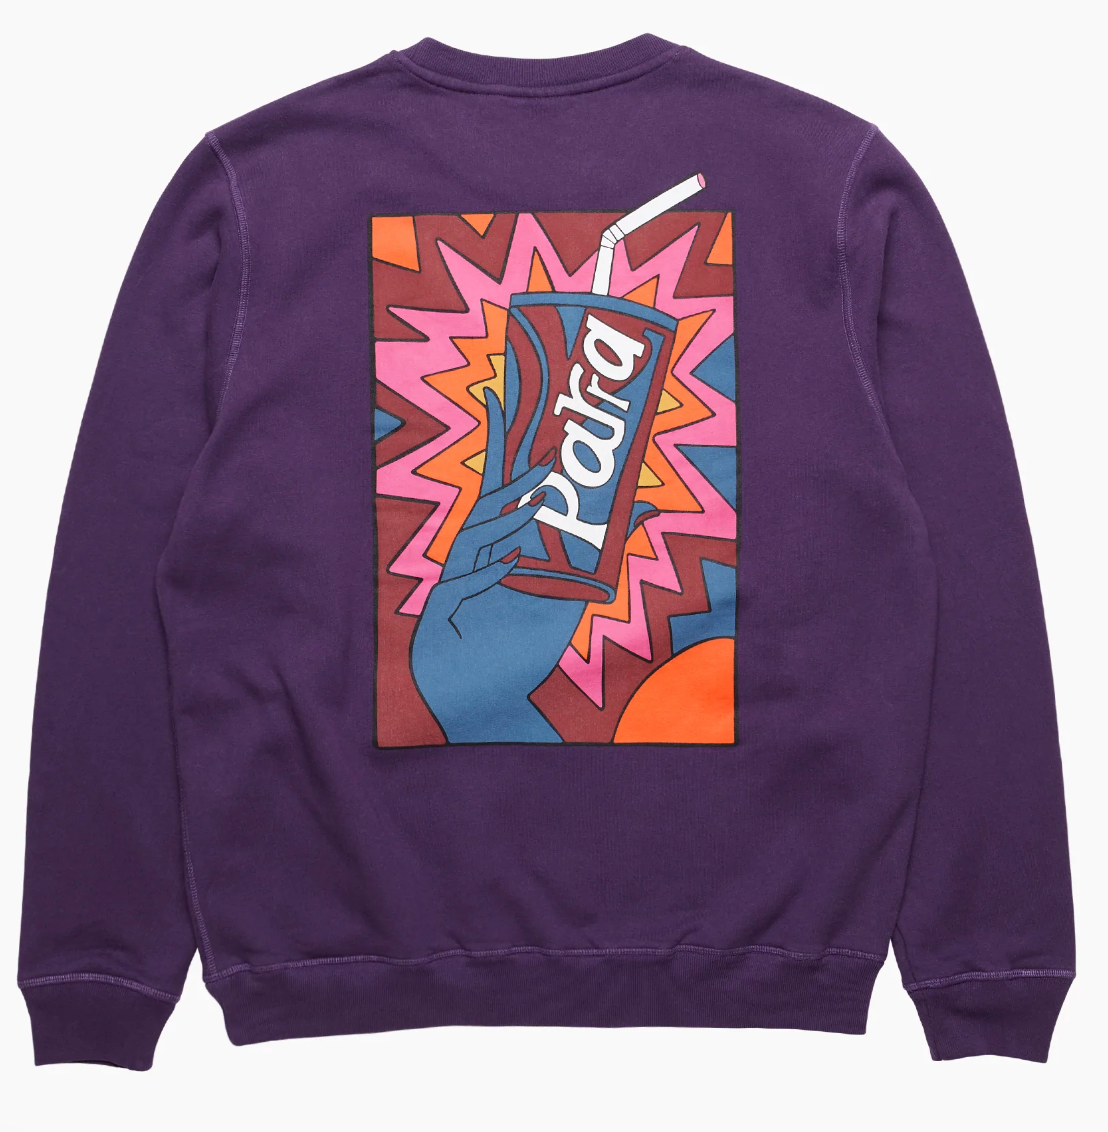 Rushed Sugar Crew Neck Sweatshirt (Purple)